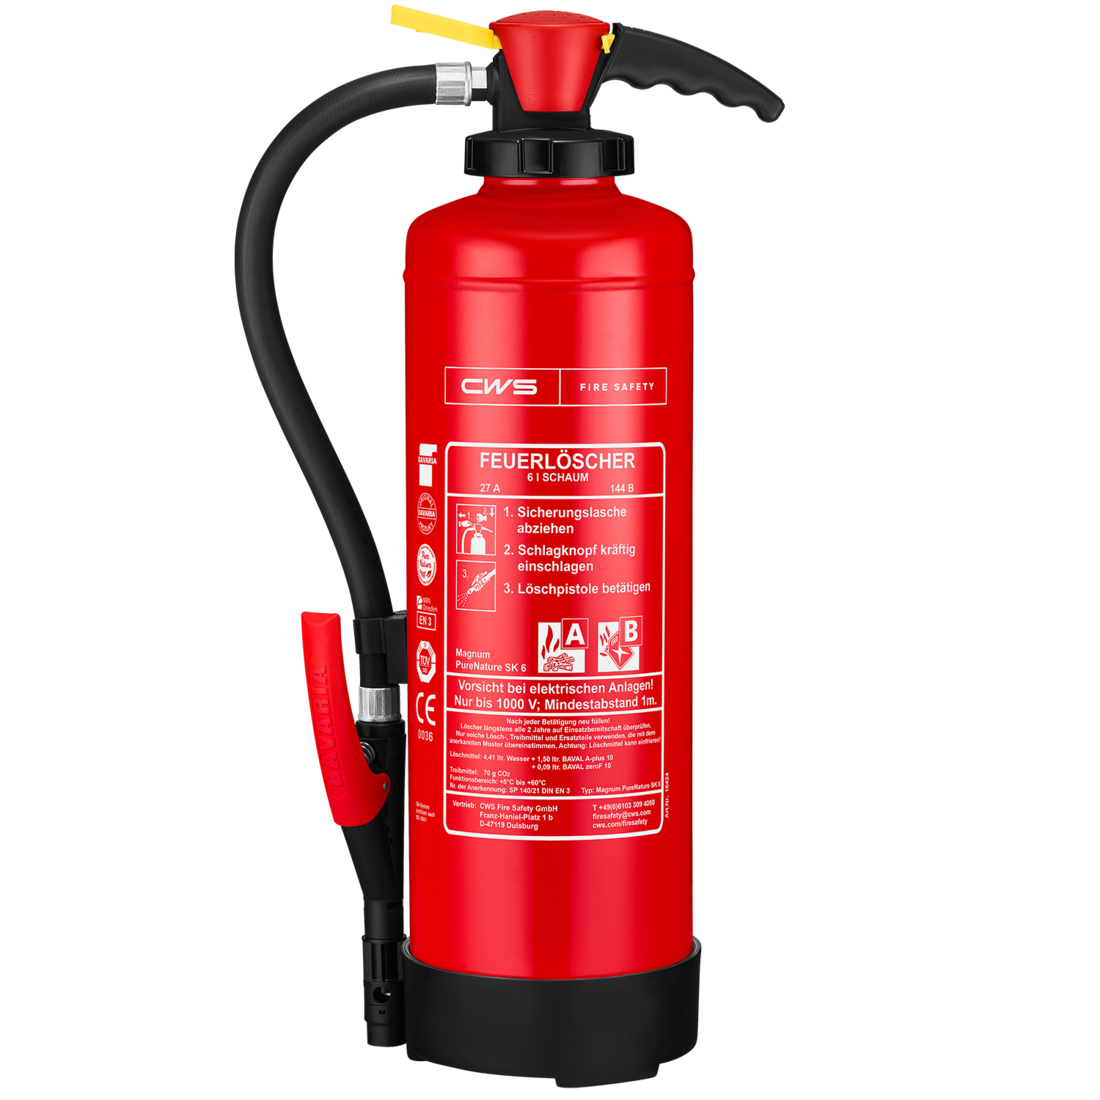 Fluorine-free foam extinguishers